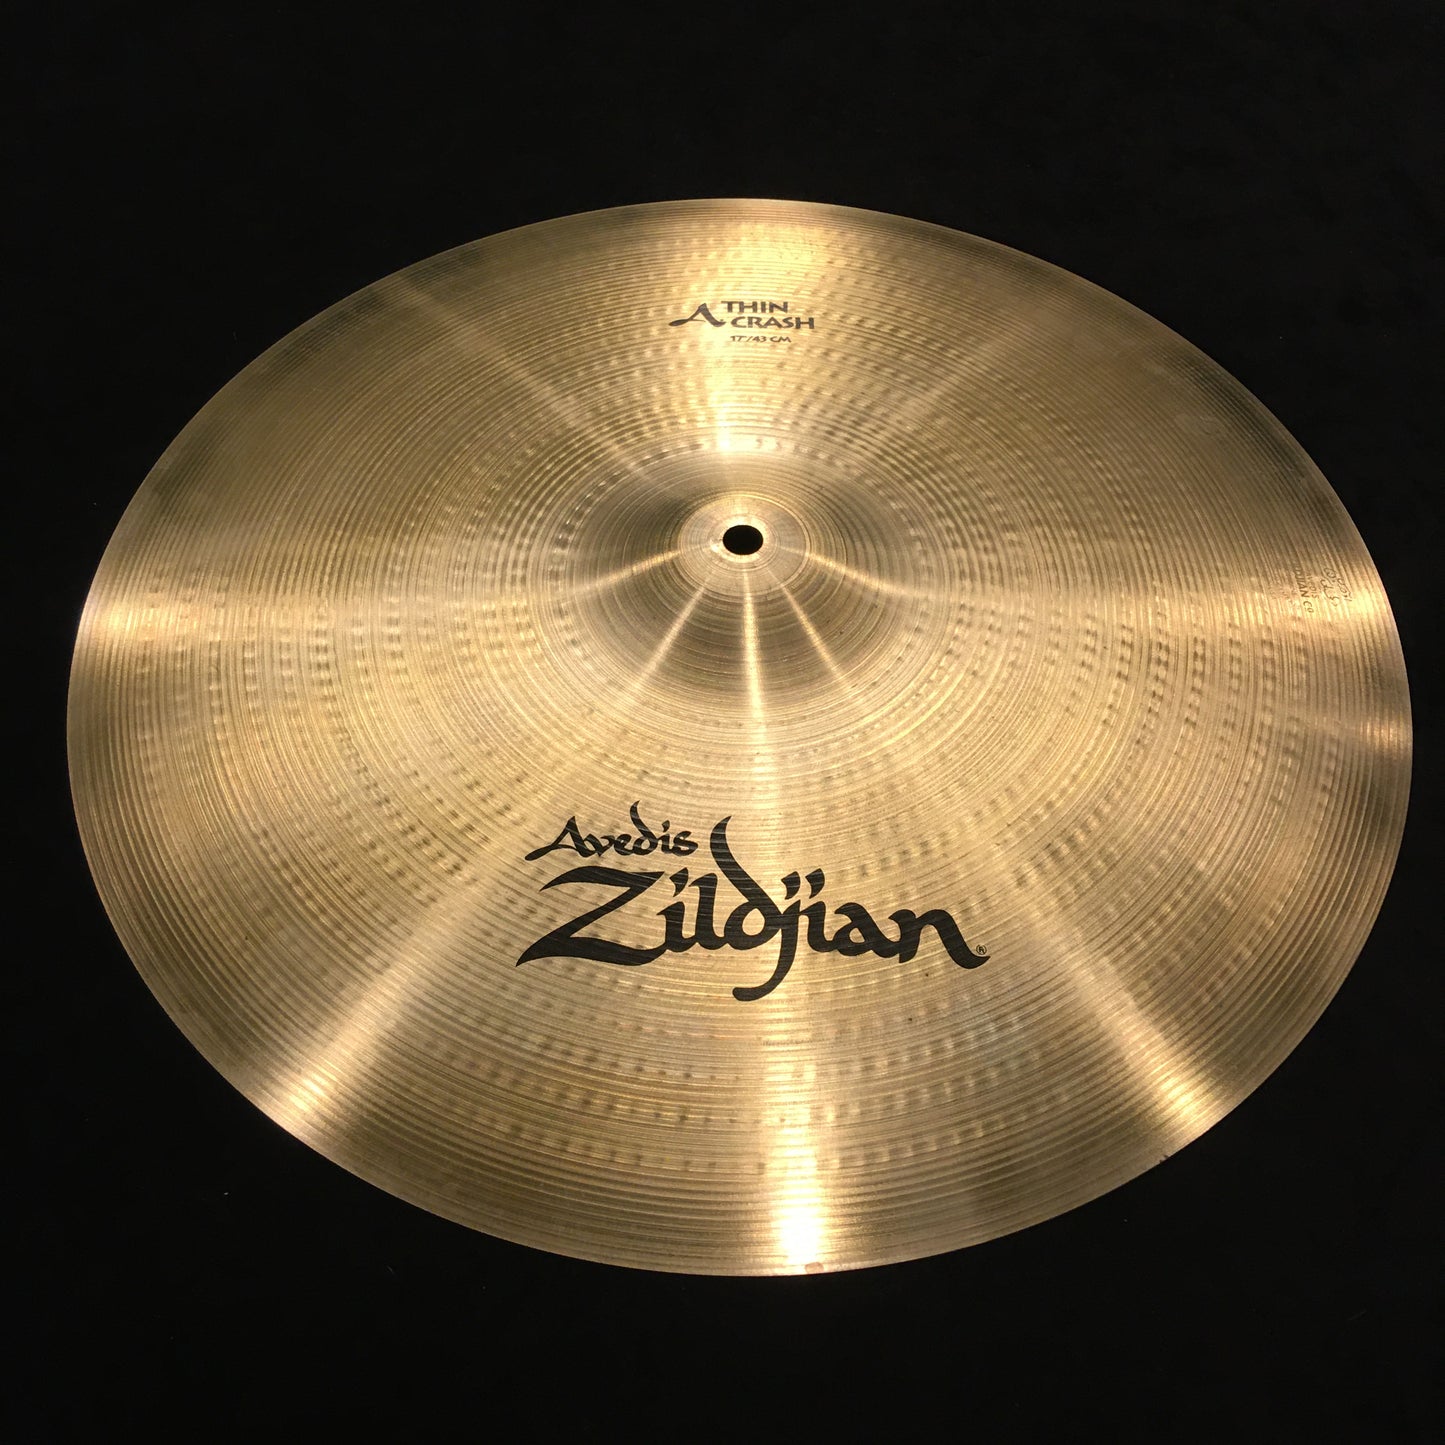 17" Zildjian A Avidis Thin Crash Cymbal 1246g